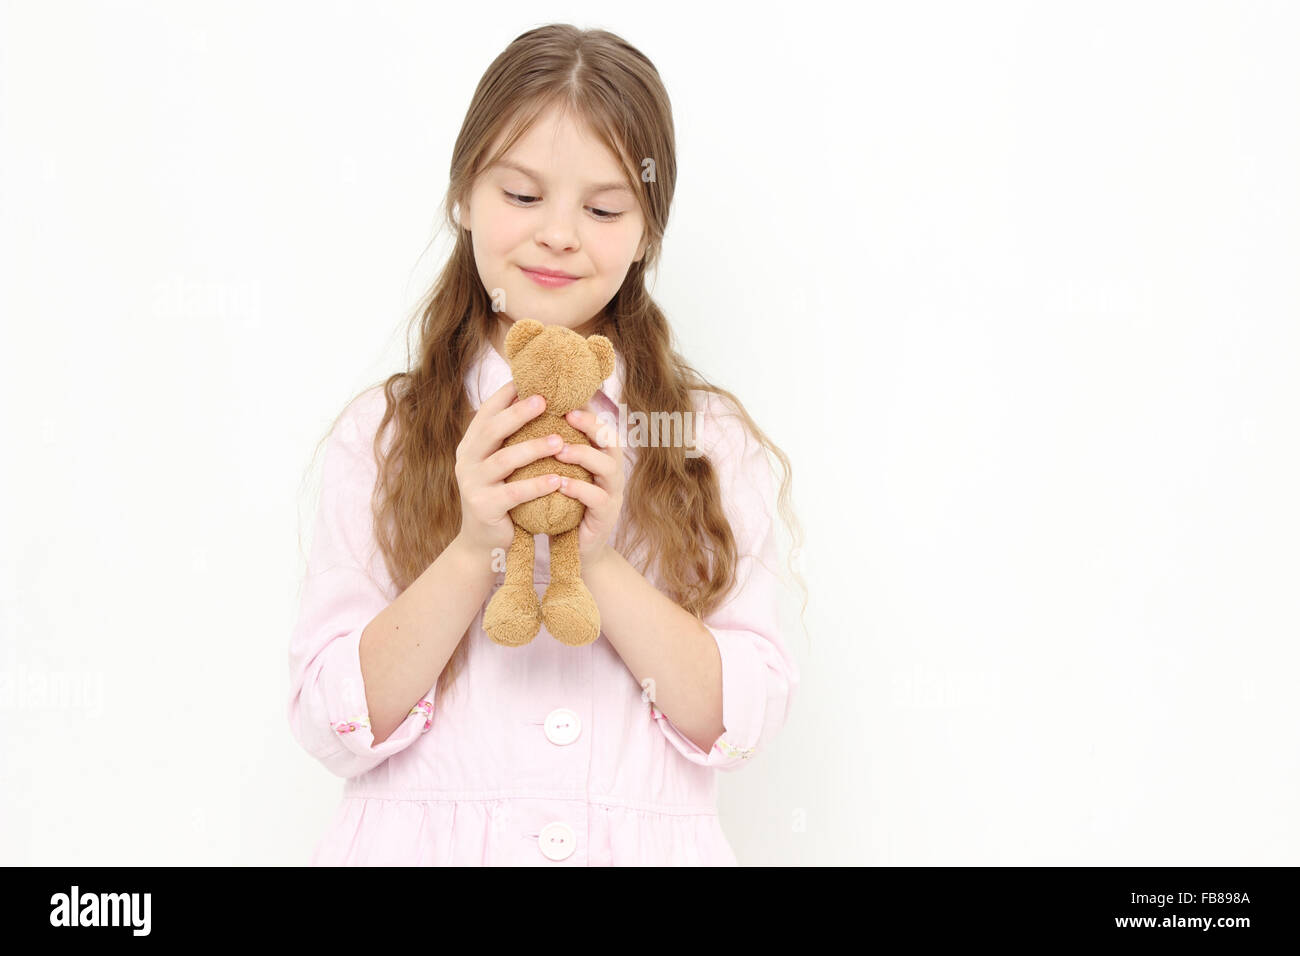 little girl holding toy bear Stock Photo